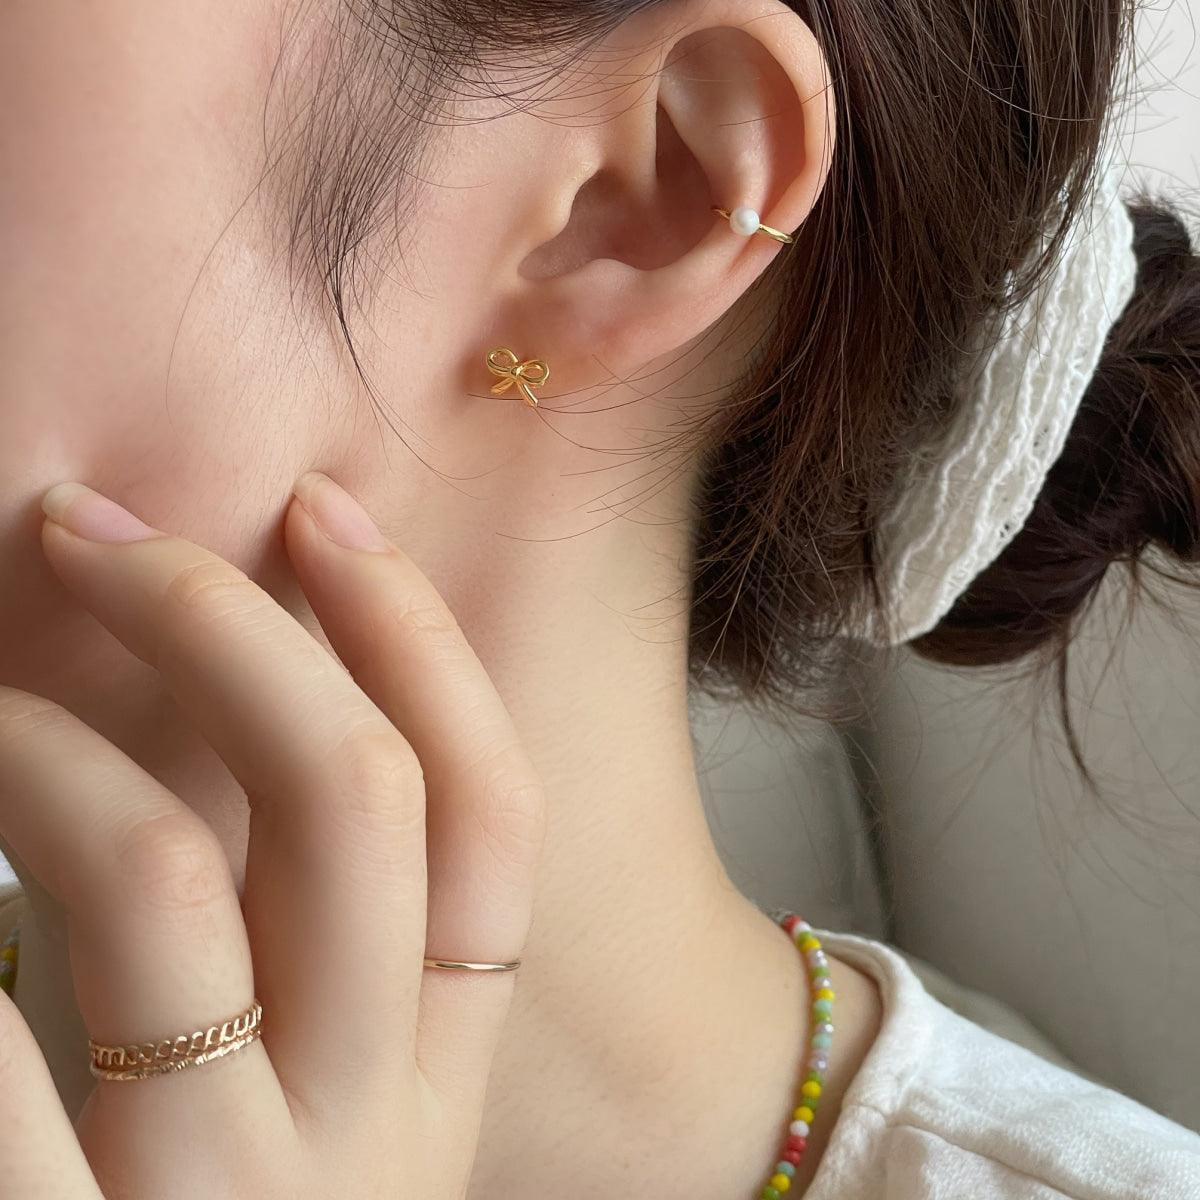 [925 Silver]リボン結びピアス Earrings 10000won 